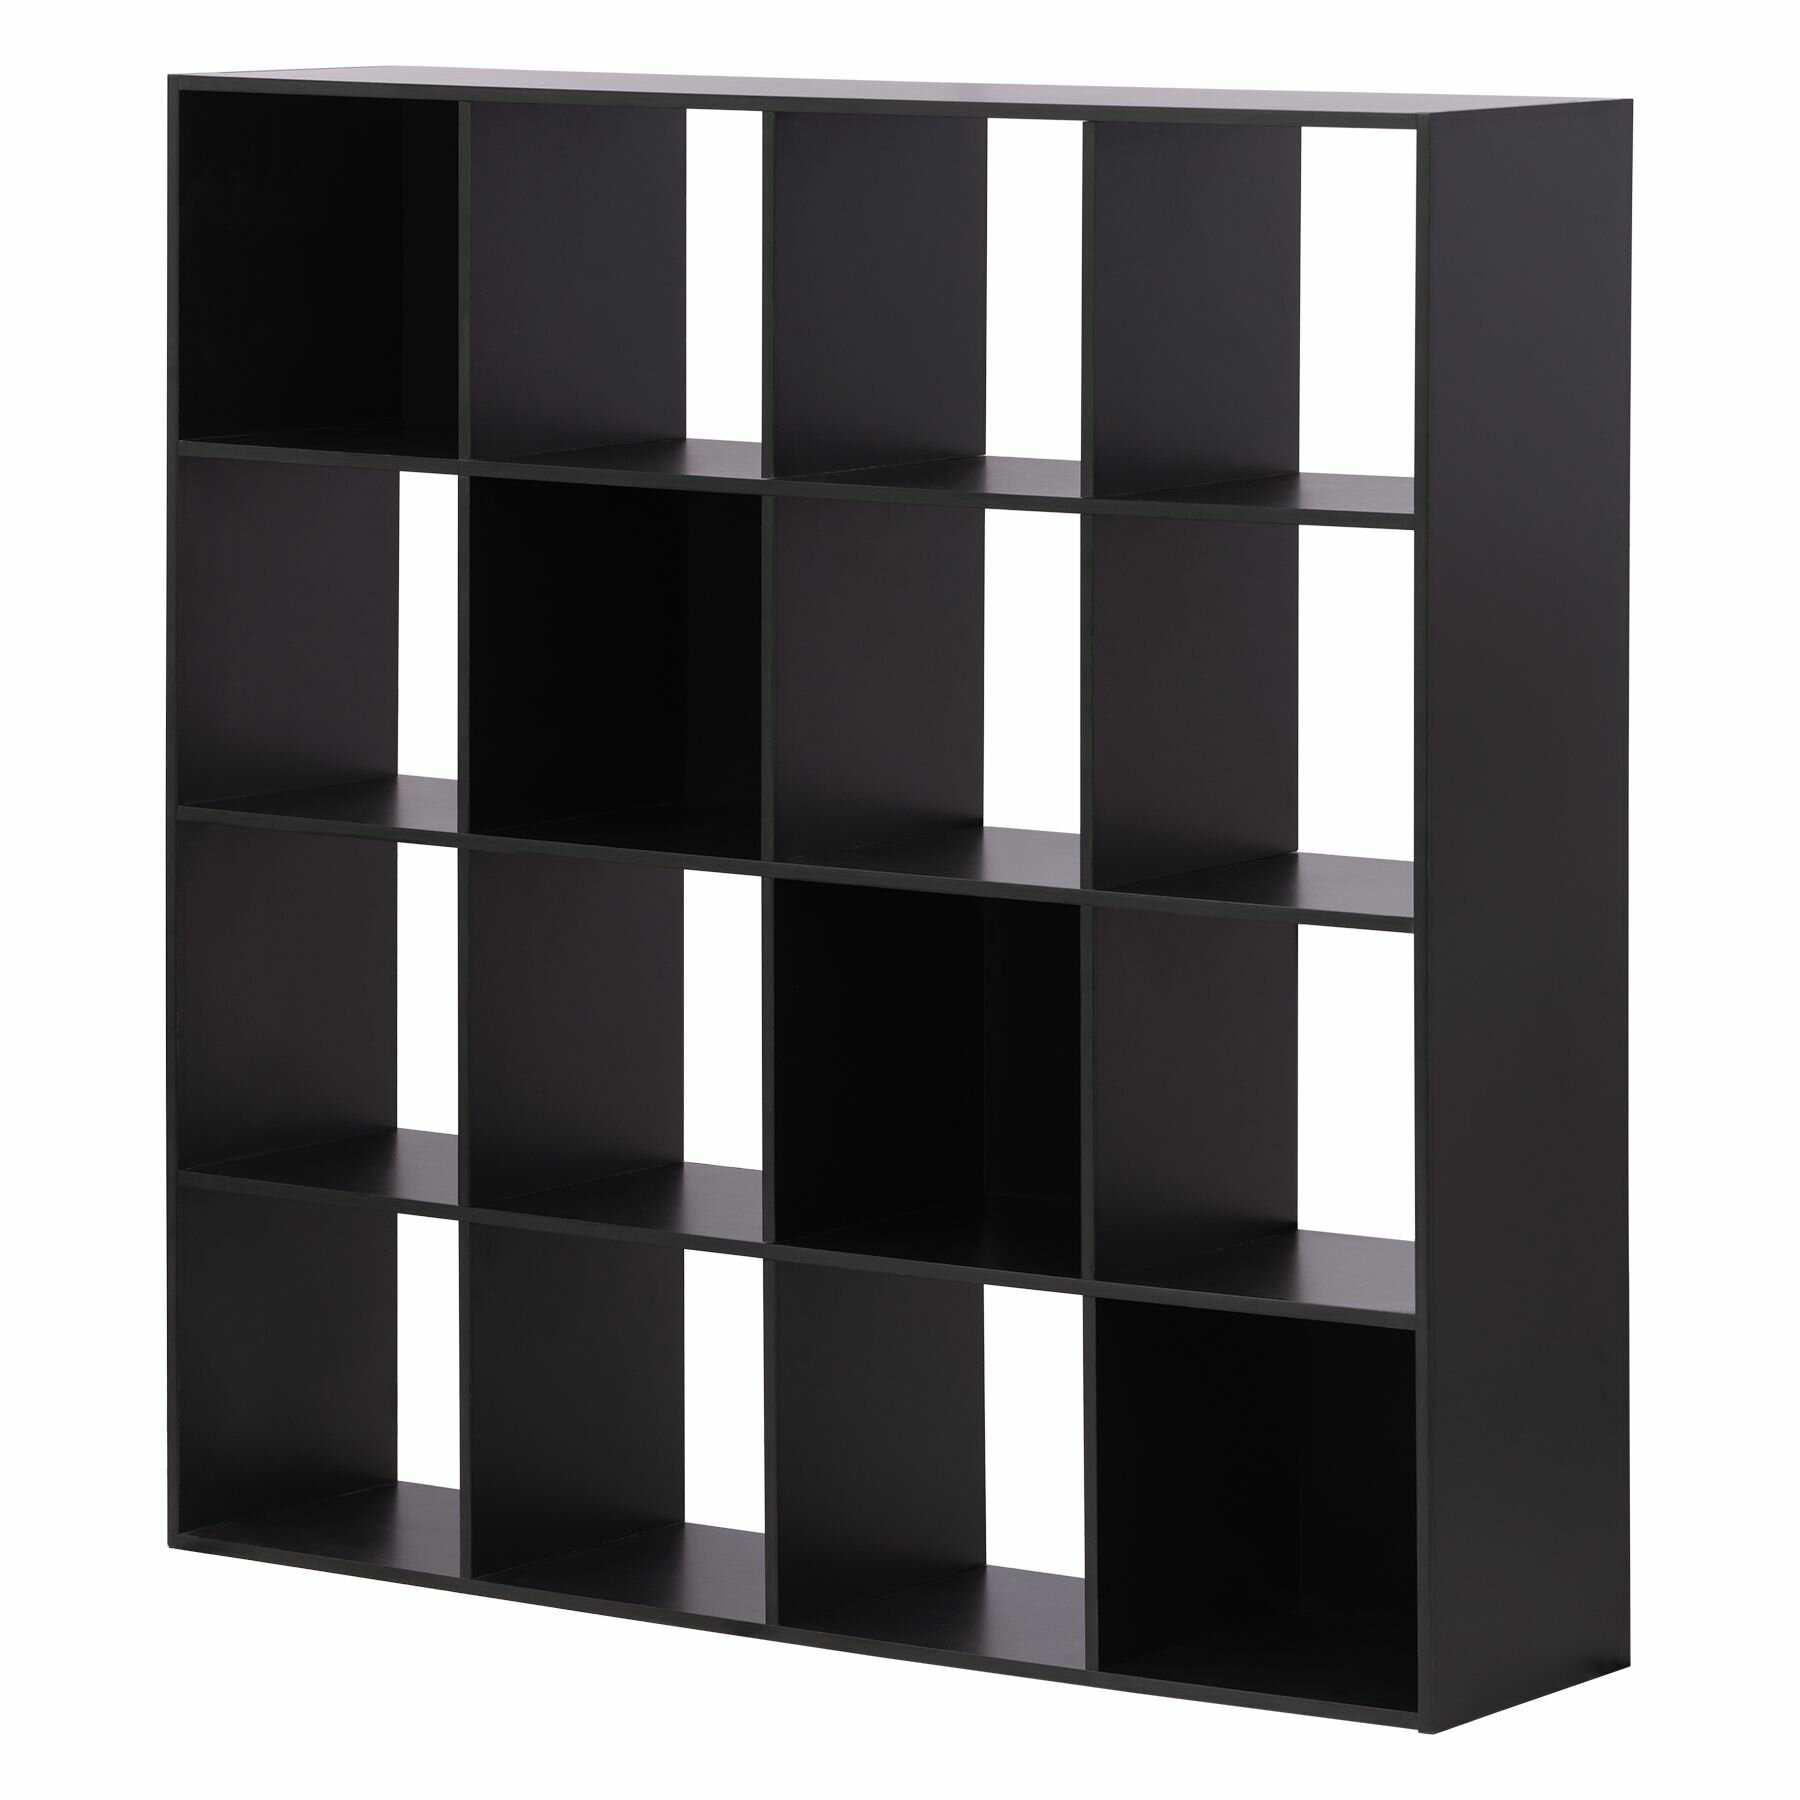 Brayden Studio Dunning 16 Cube Bookcase Wayfair